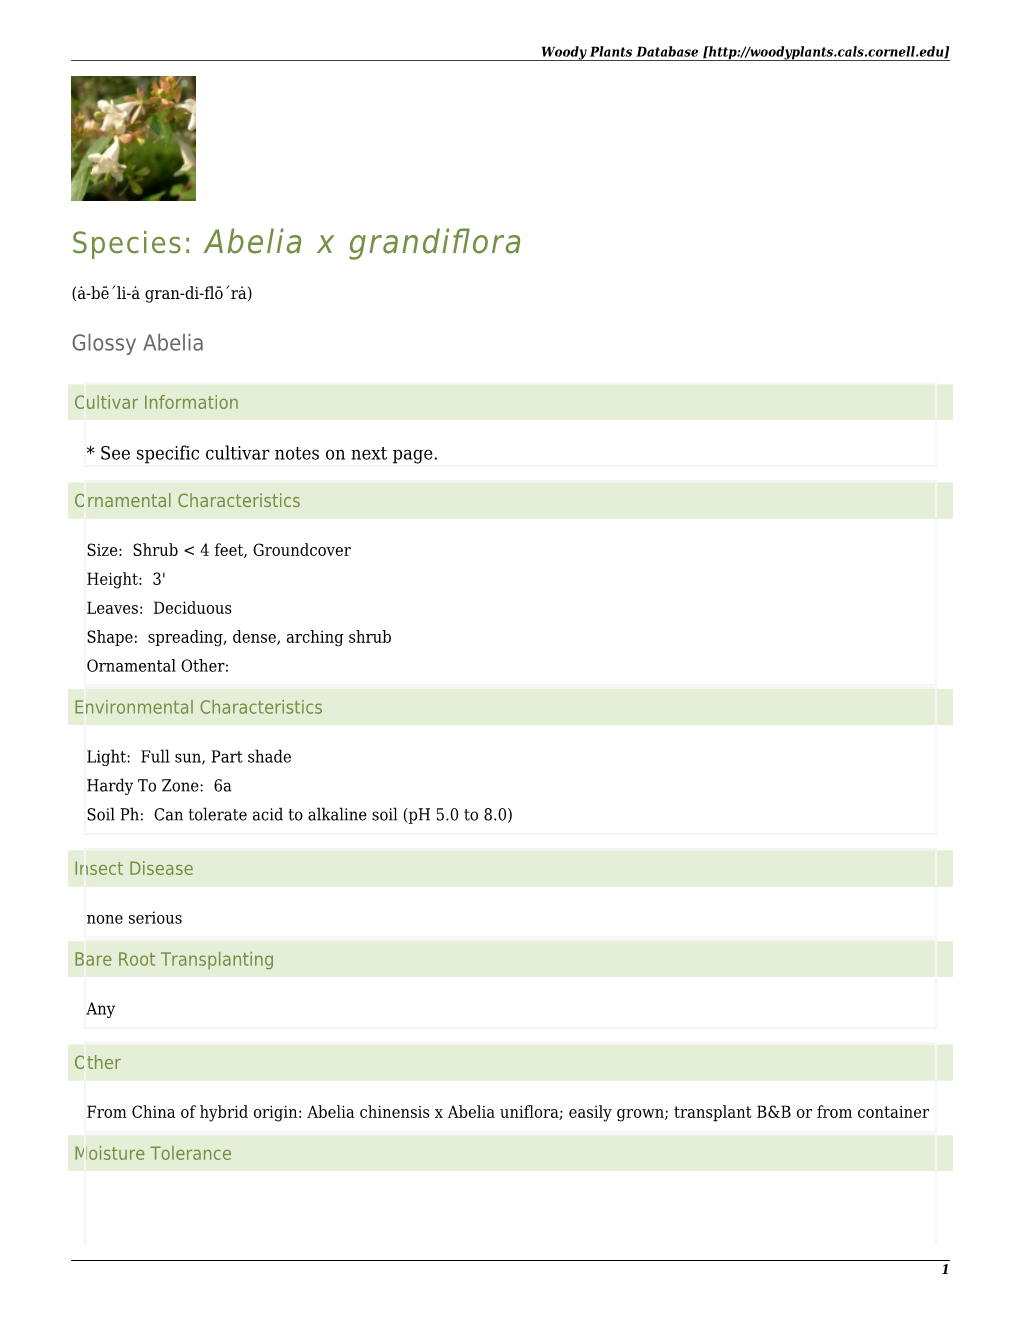 Species: Abelia X Grandiflora